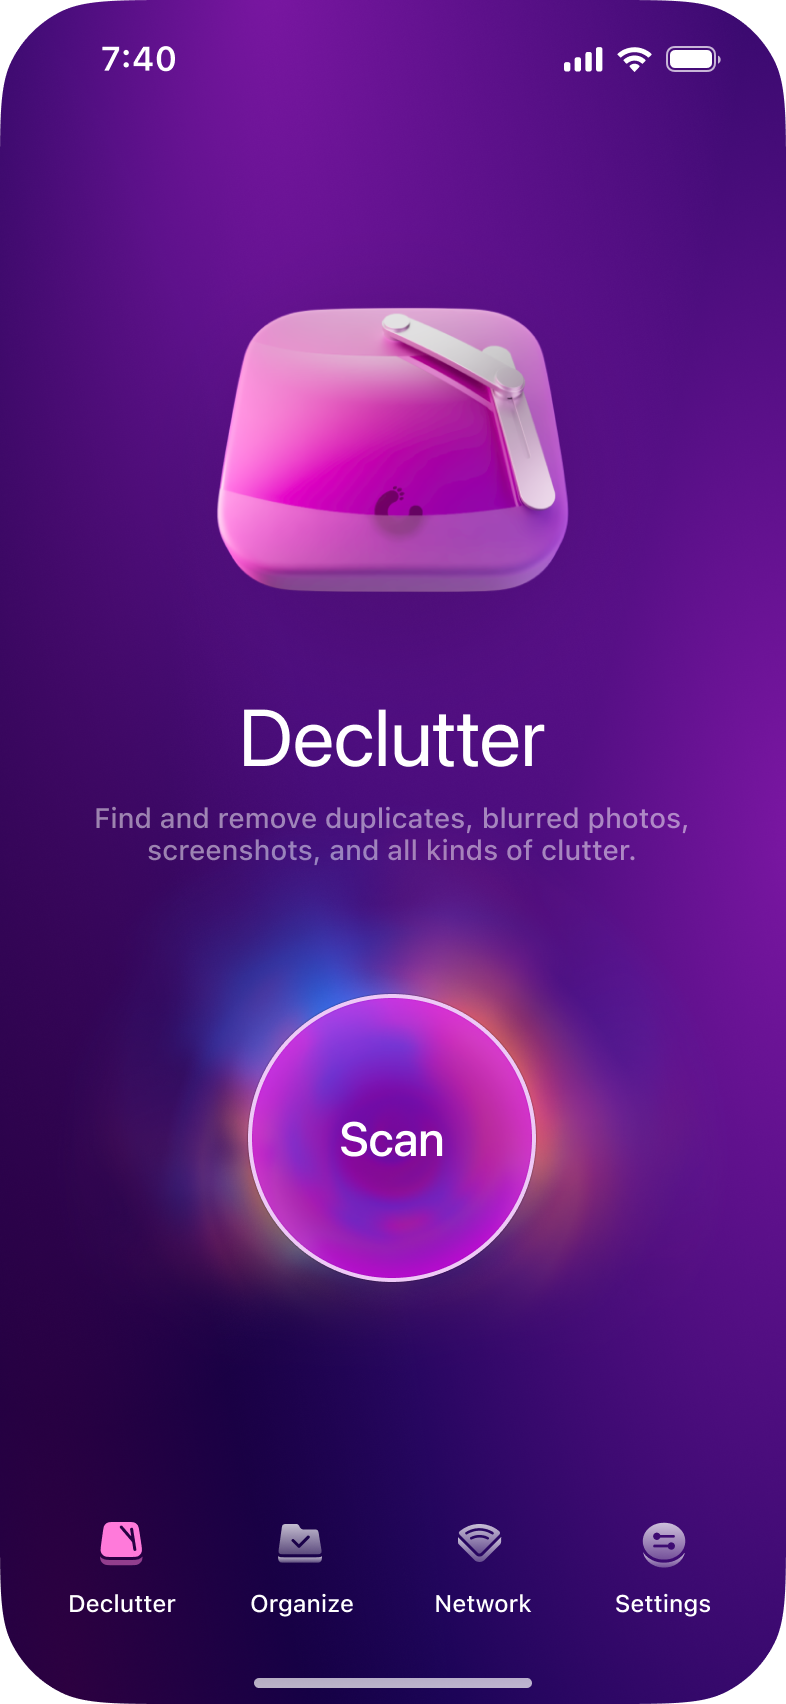 Declutter module in CleanMy®Phone